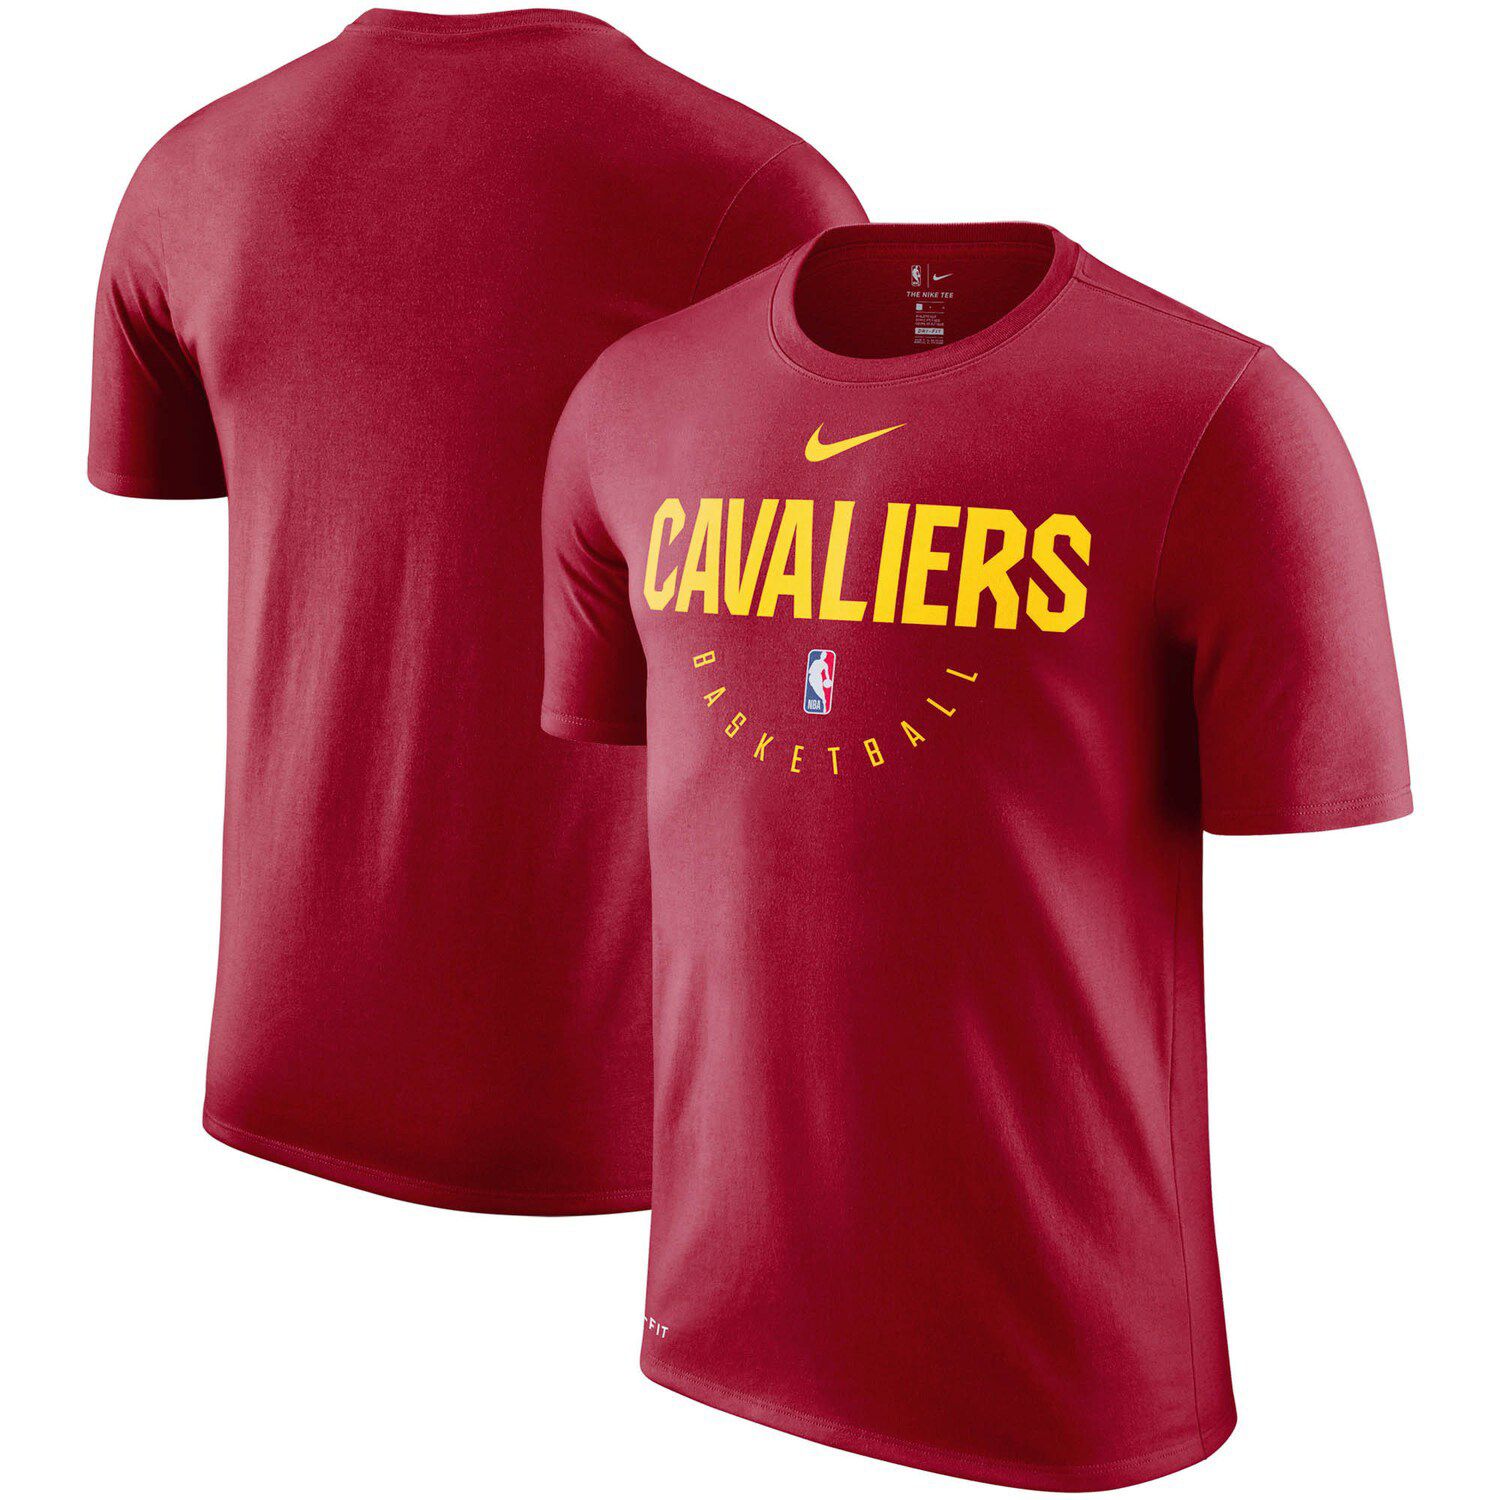 cleveland cavaliers shirts walmart